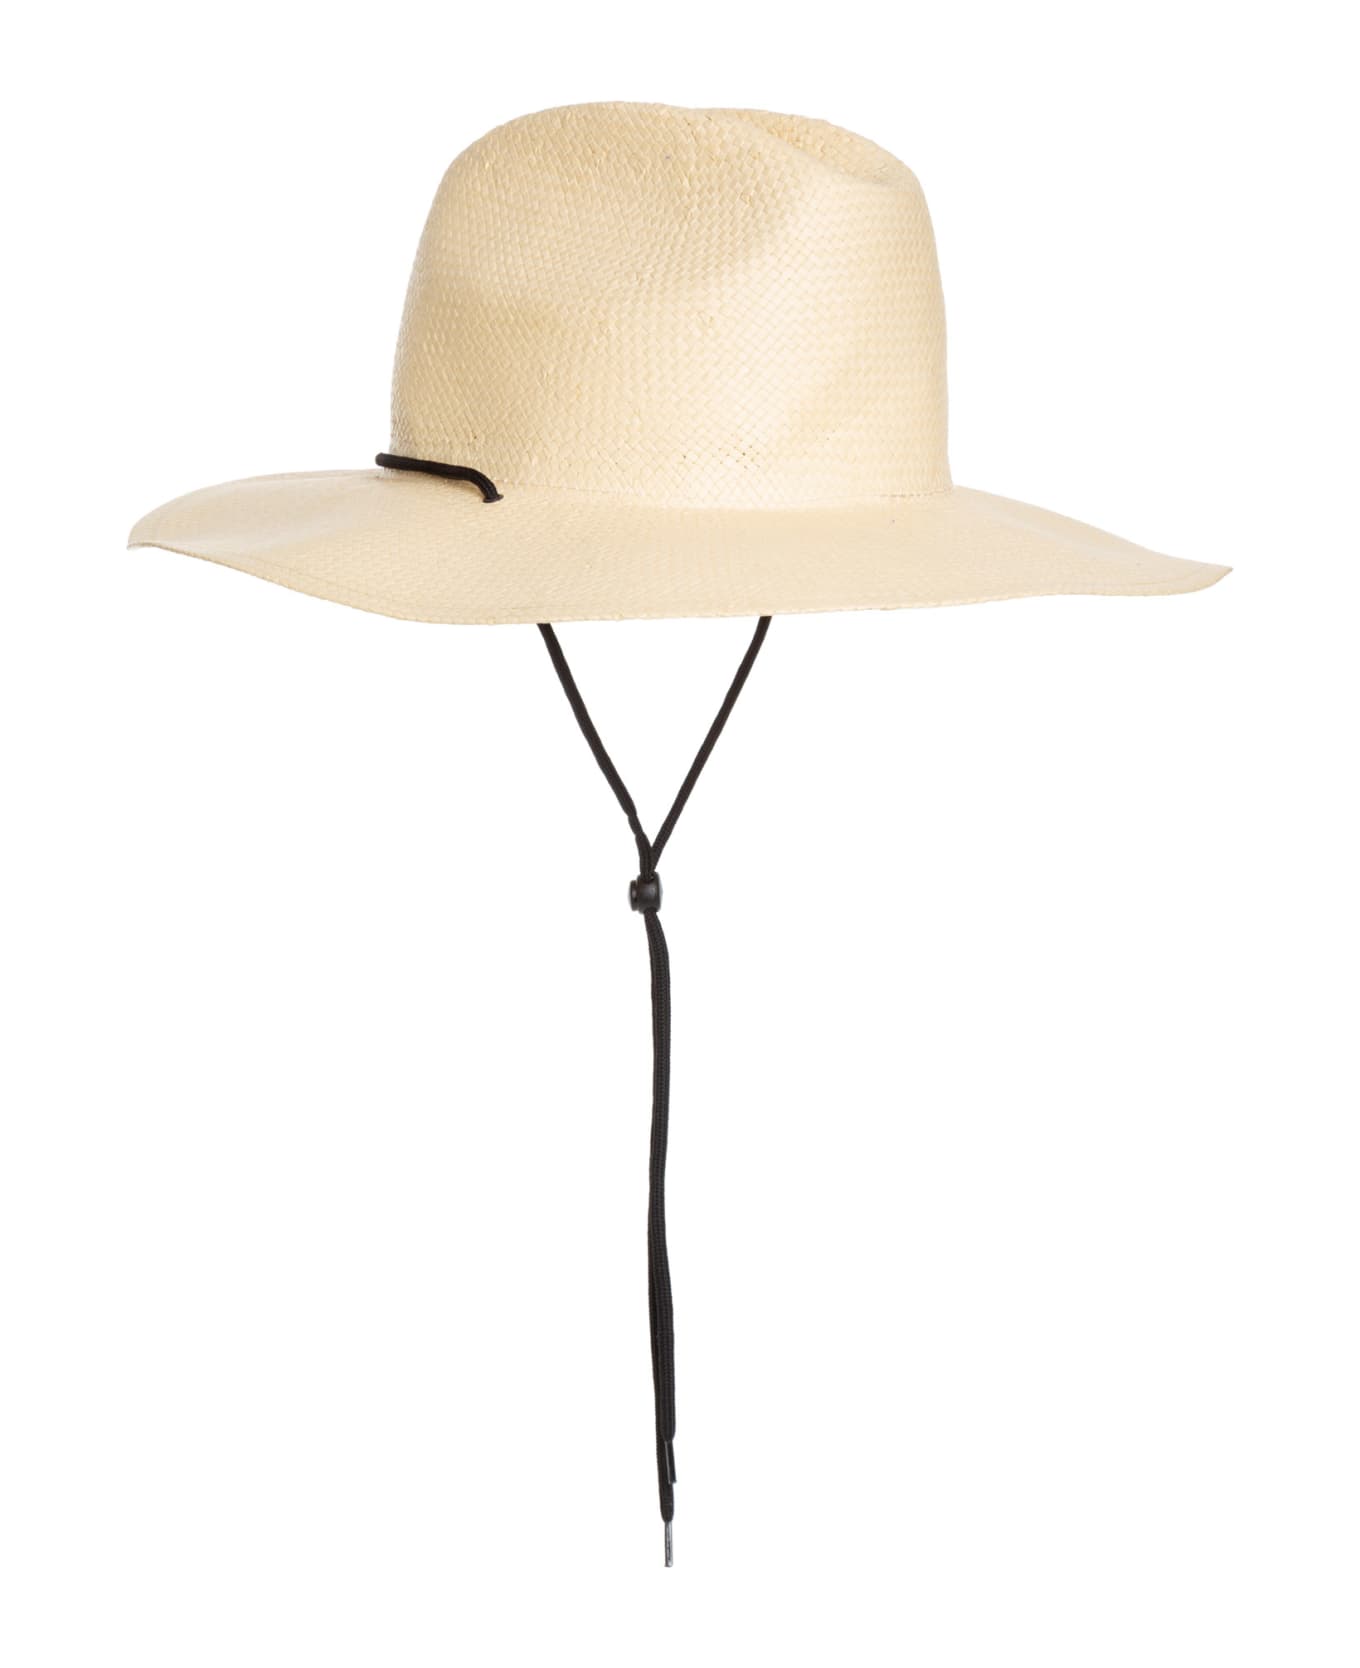 EA7 Hat - Natural